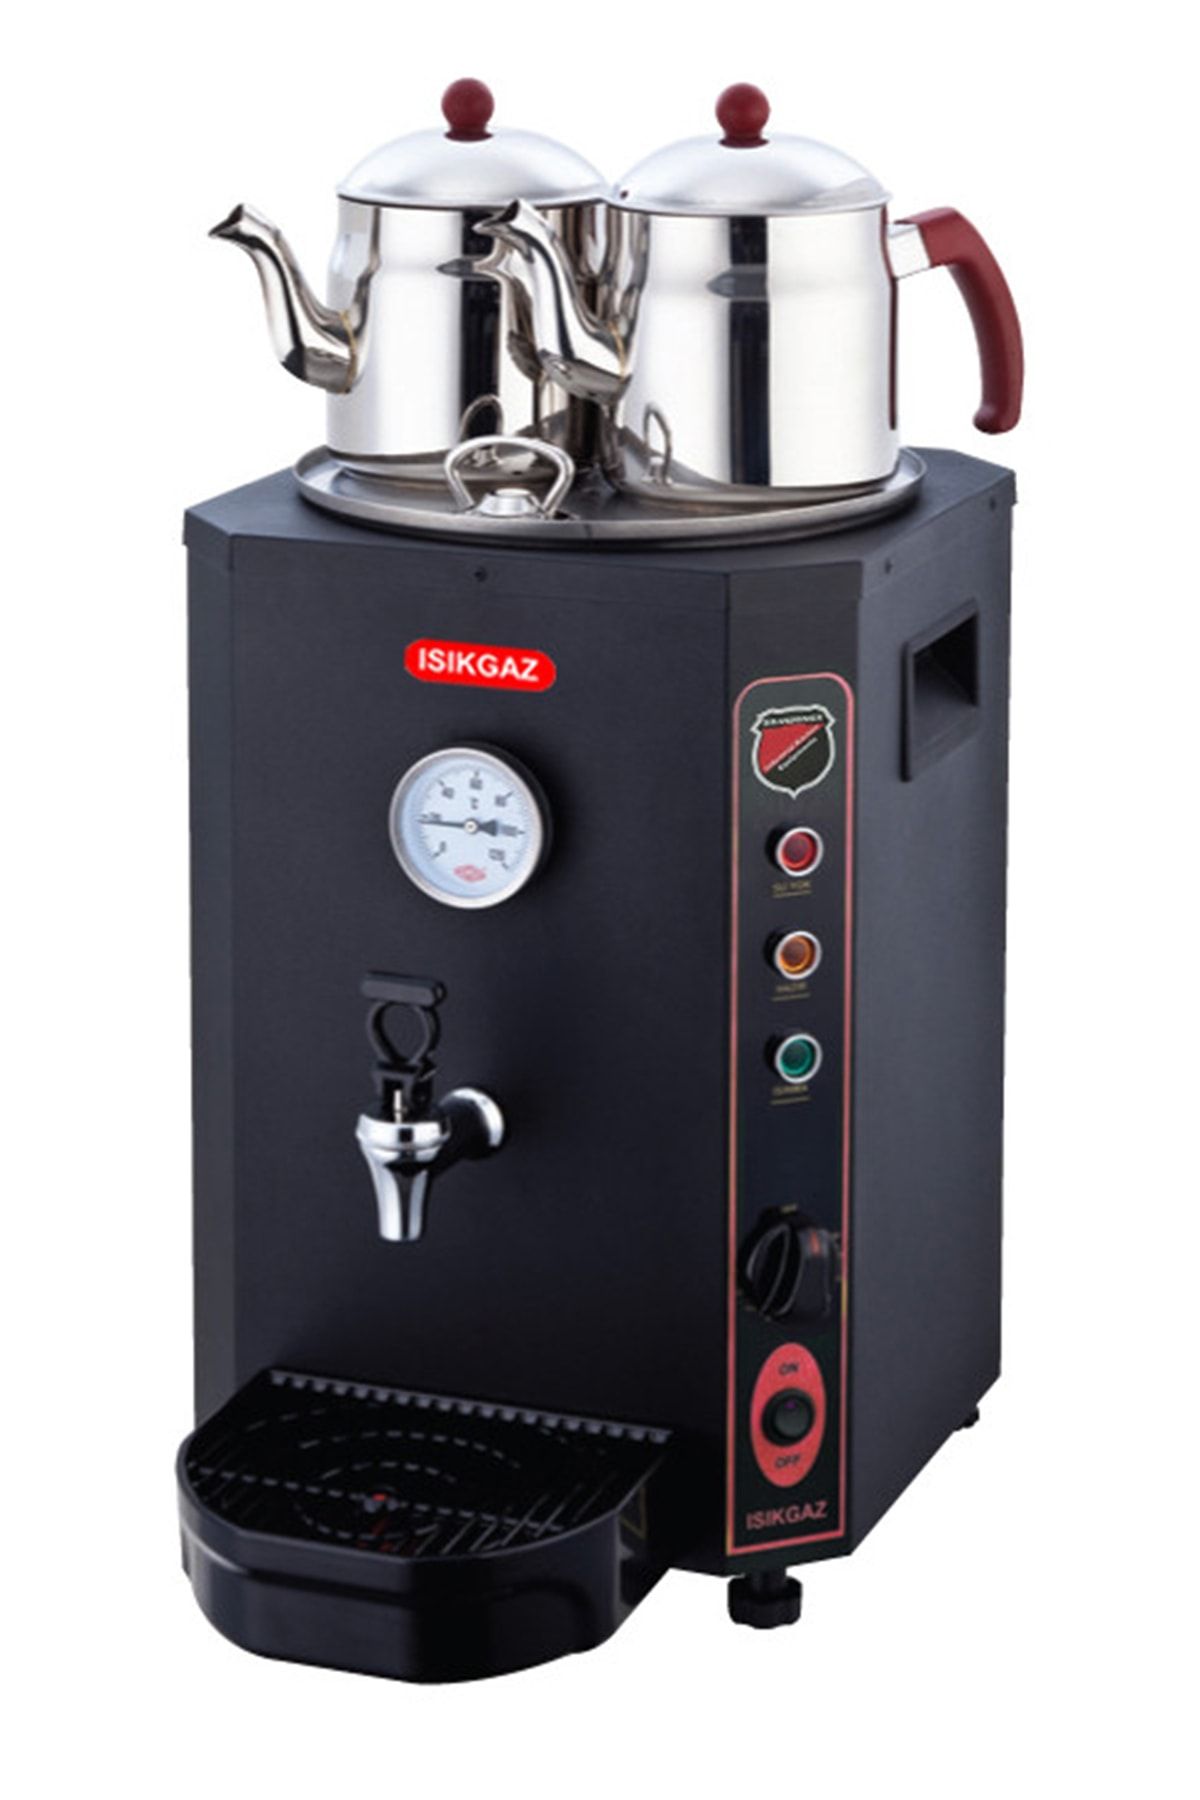 Işıkgaz Jumbo Çay Makinesi 23 Lt. 2250 W. Siyah Profesyonel Endüstriyel